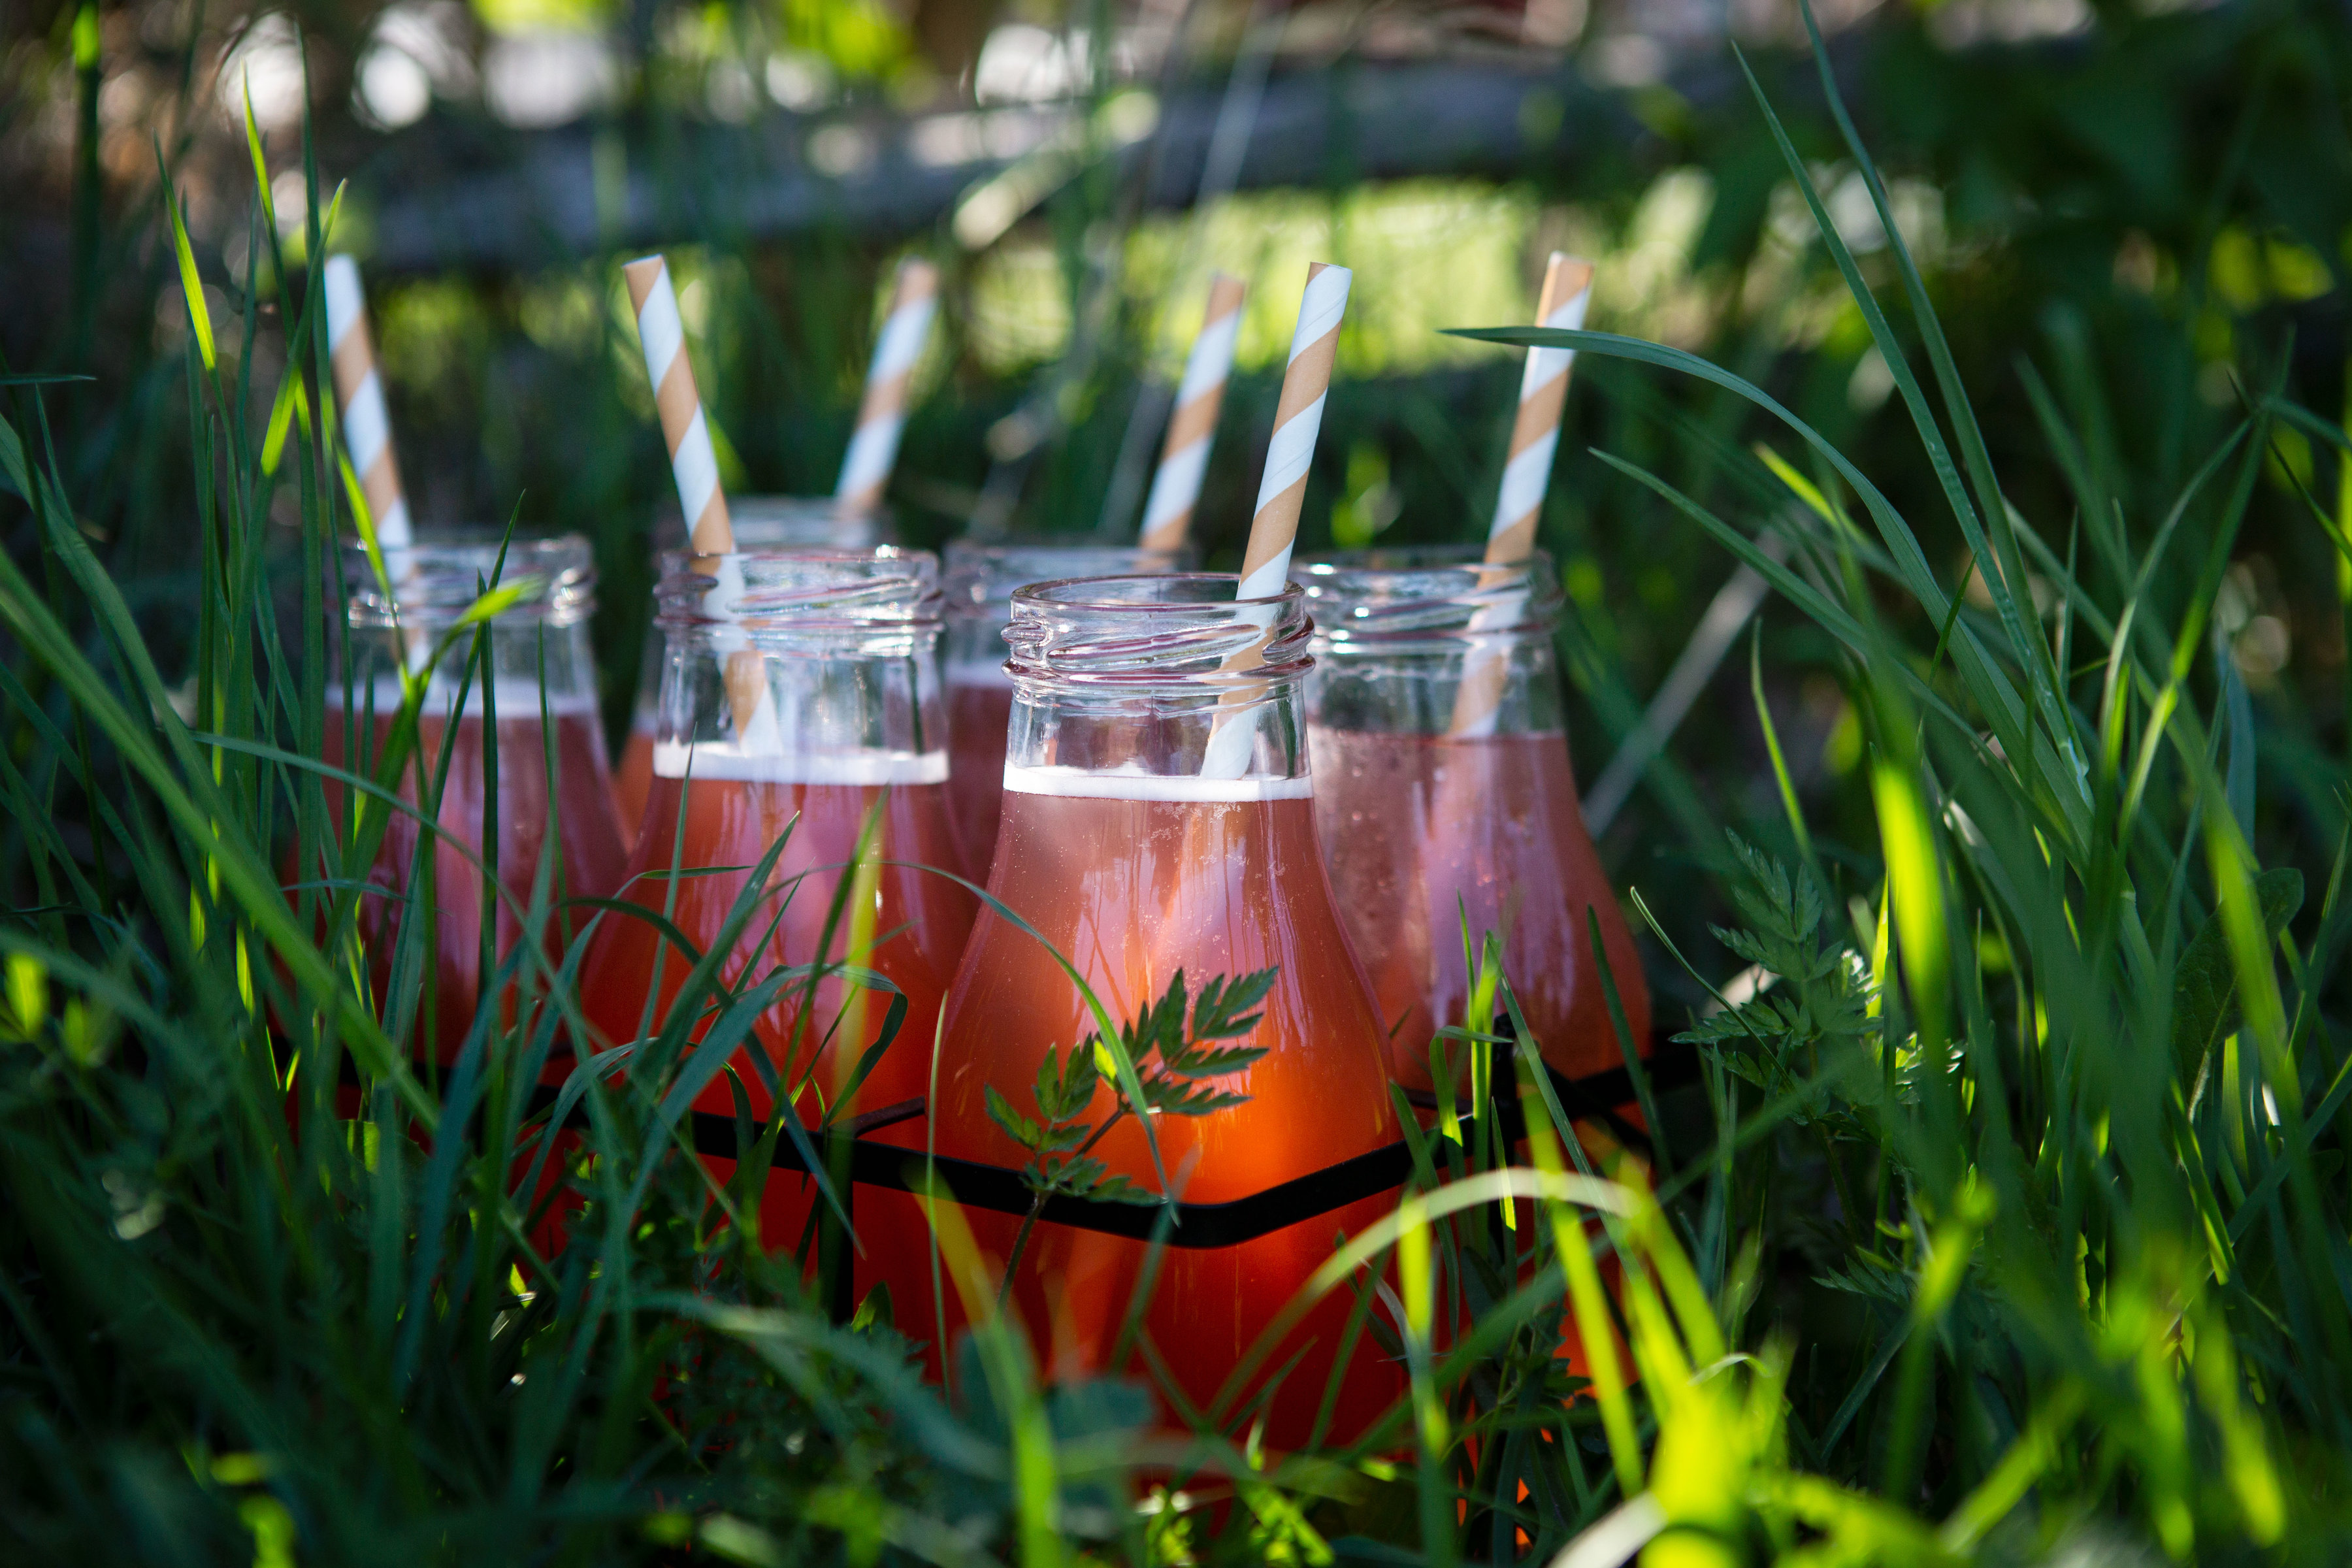 Sex fina glasflaskor med rosaröd rabarbersaft står i gräset med vackert ljus som strilar mellan bladen. Forced rhubarb, six glass bottles with pink rhubarb juice.